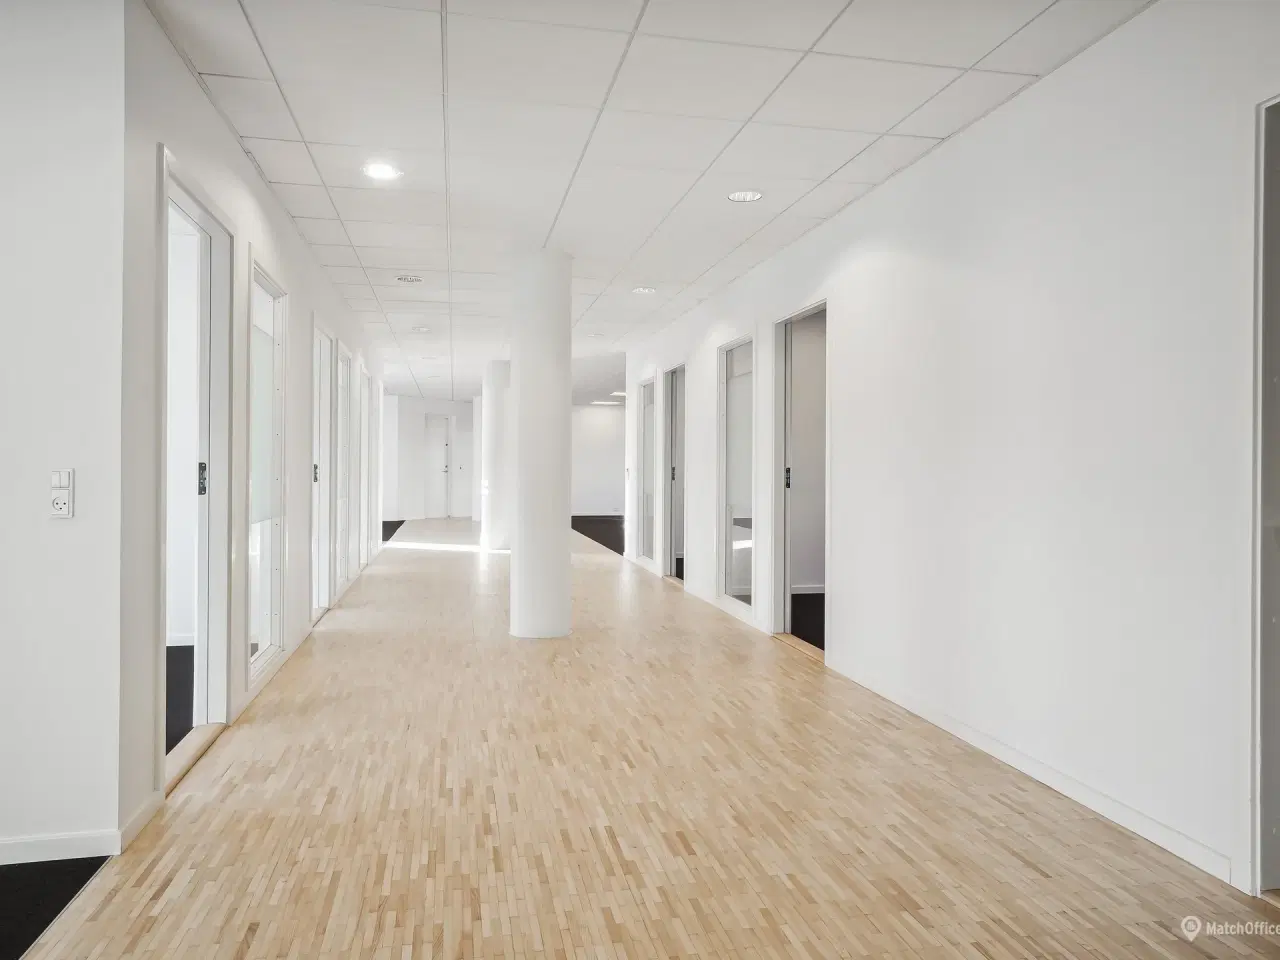 Billede 7 - Lyse og moderne kontorlokaler med rå kant